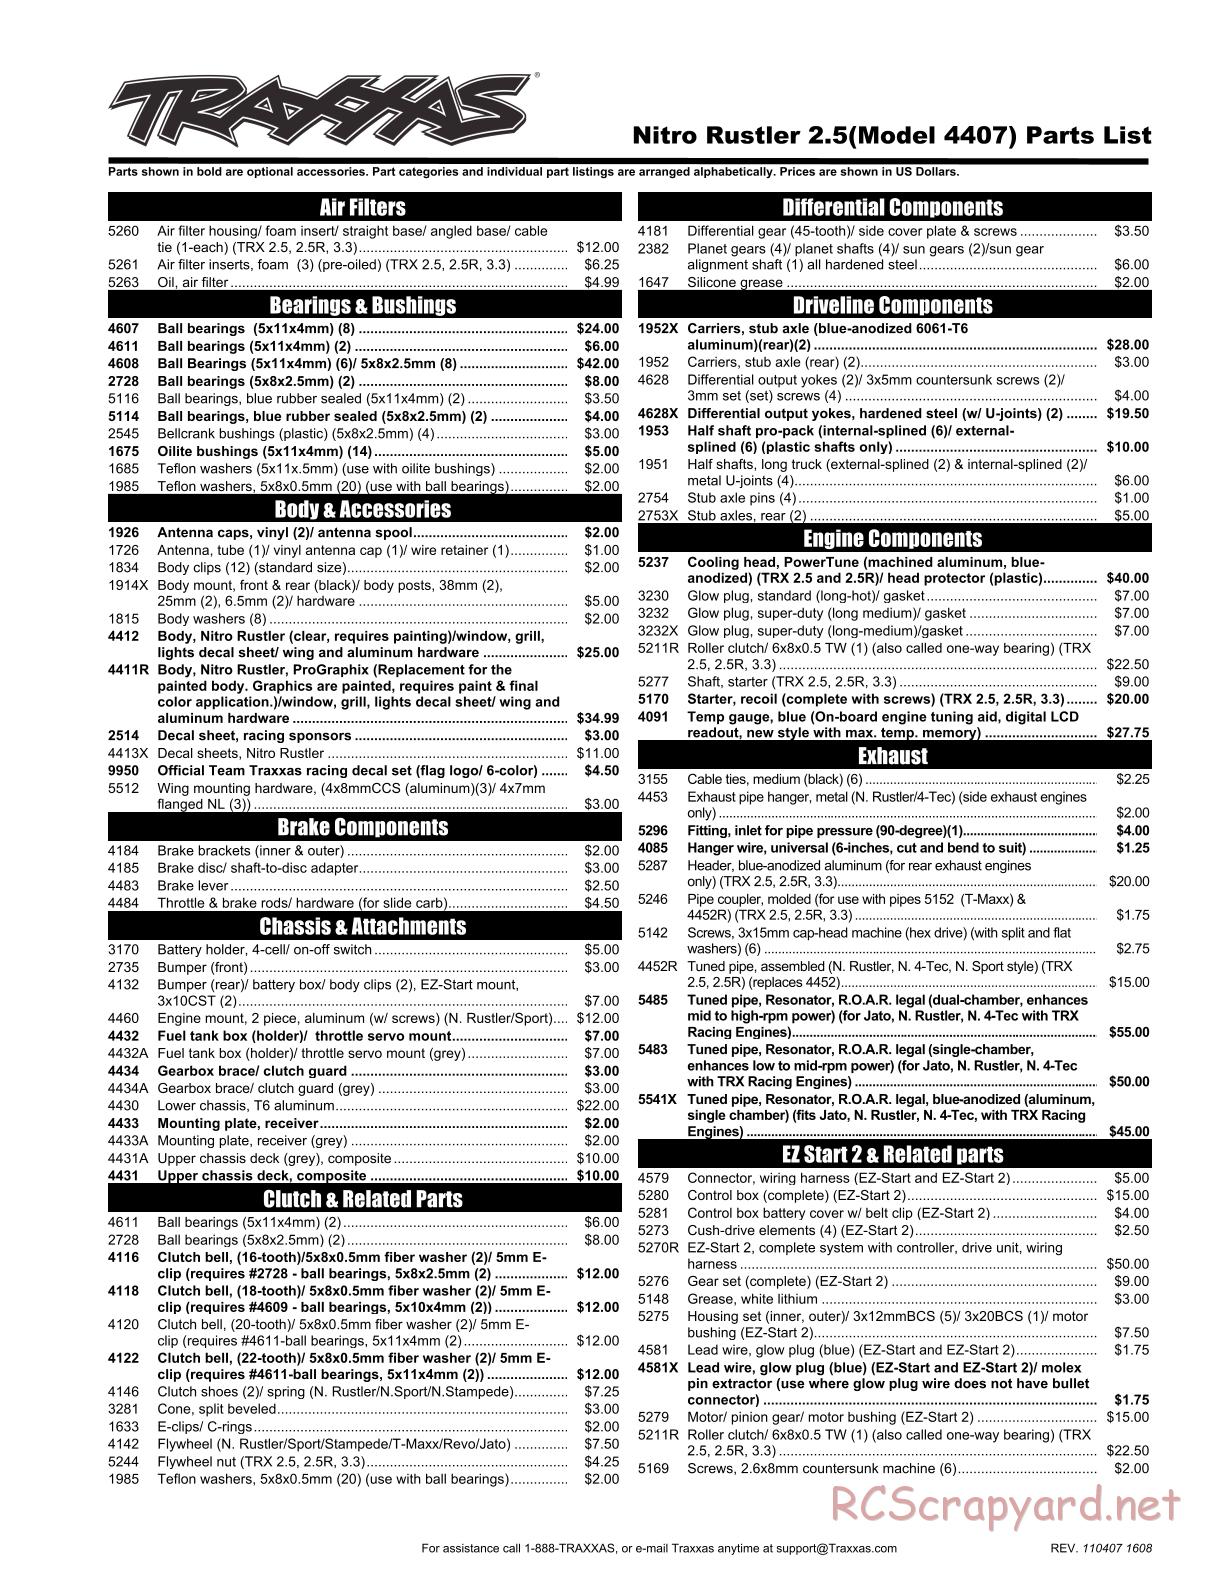 Traxxas - Nitro Rustler (2010) - Parts List - Page 1